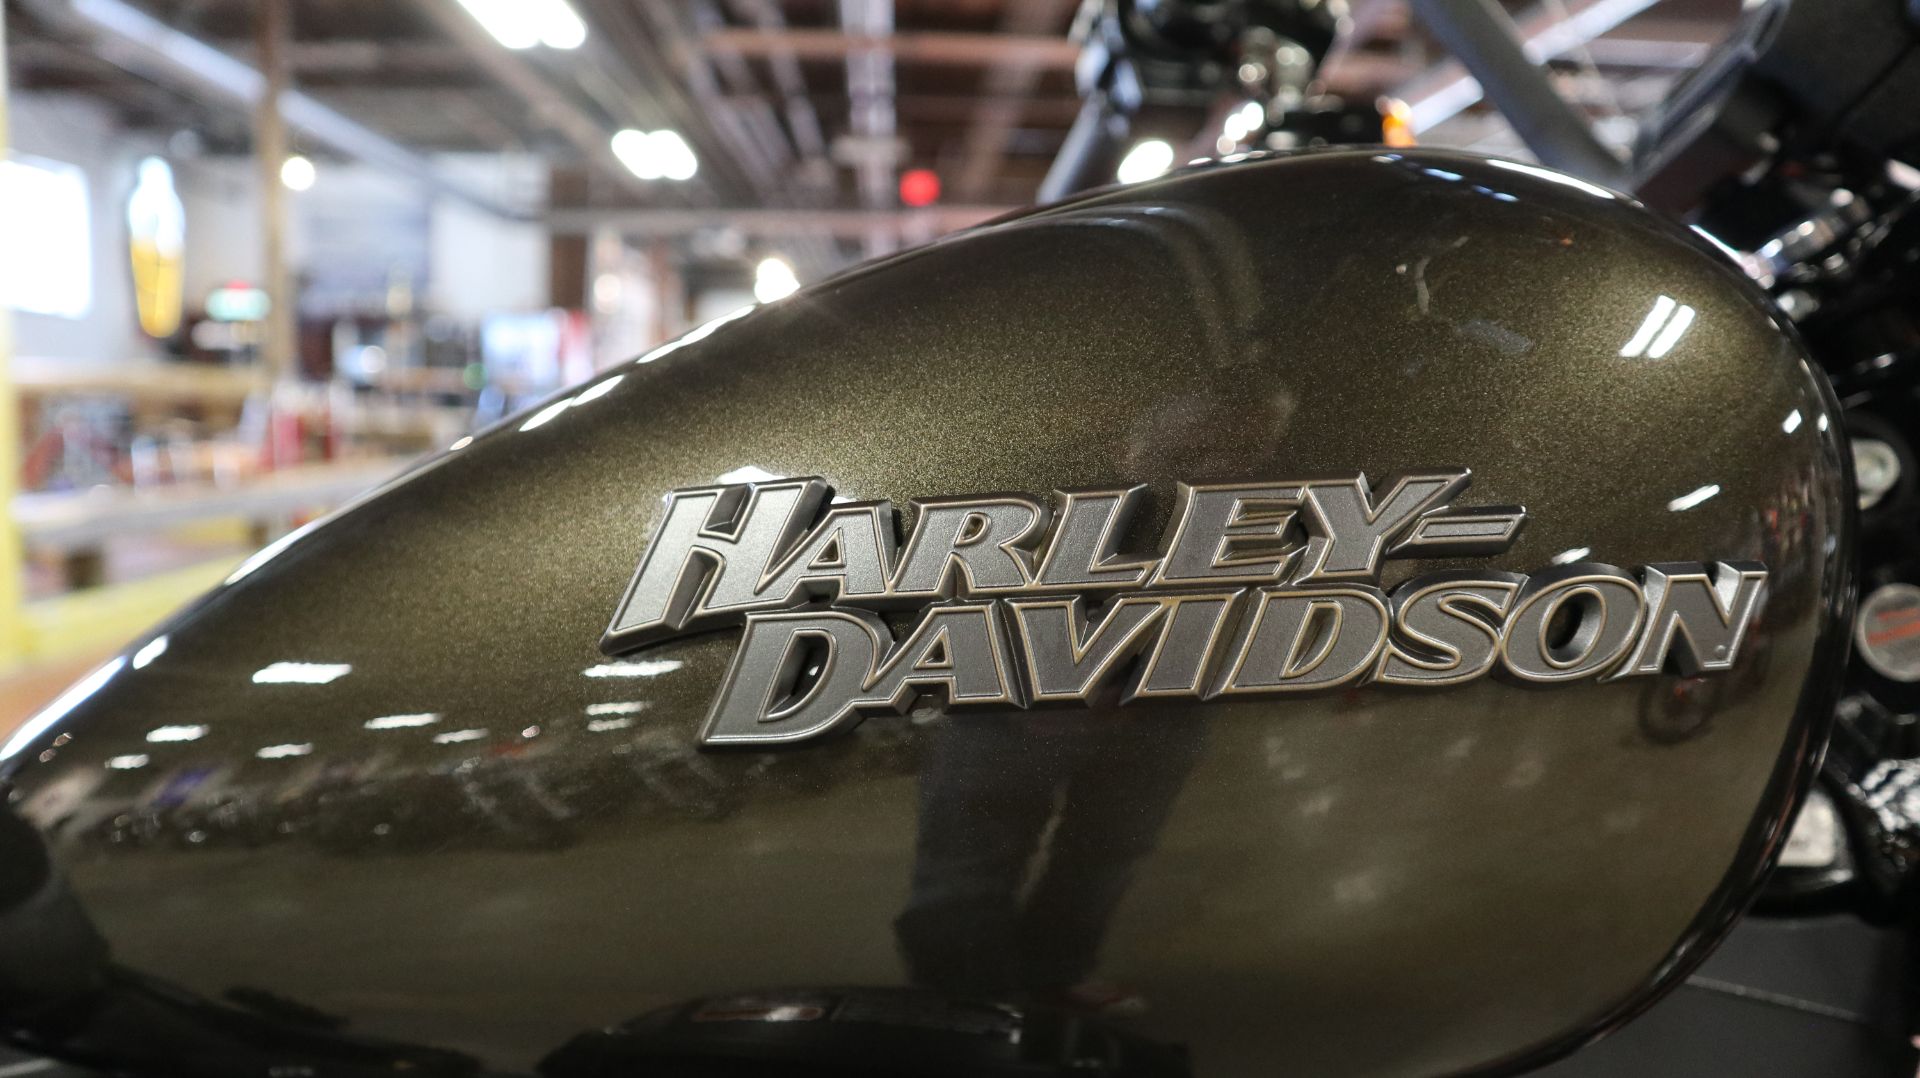 2020 Harley-Davidson Street Bob® in New London, Connecticut - Photo 9